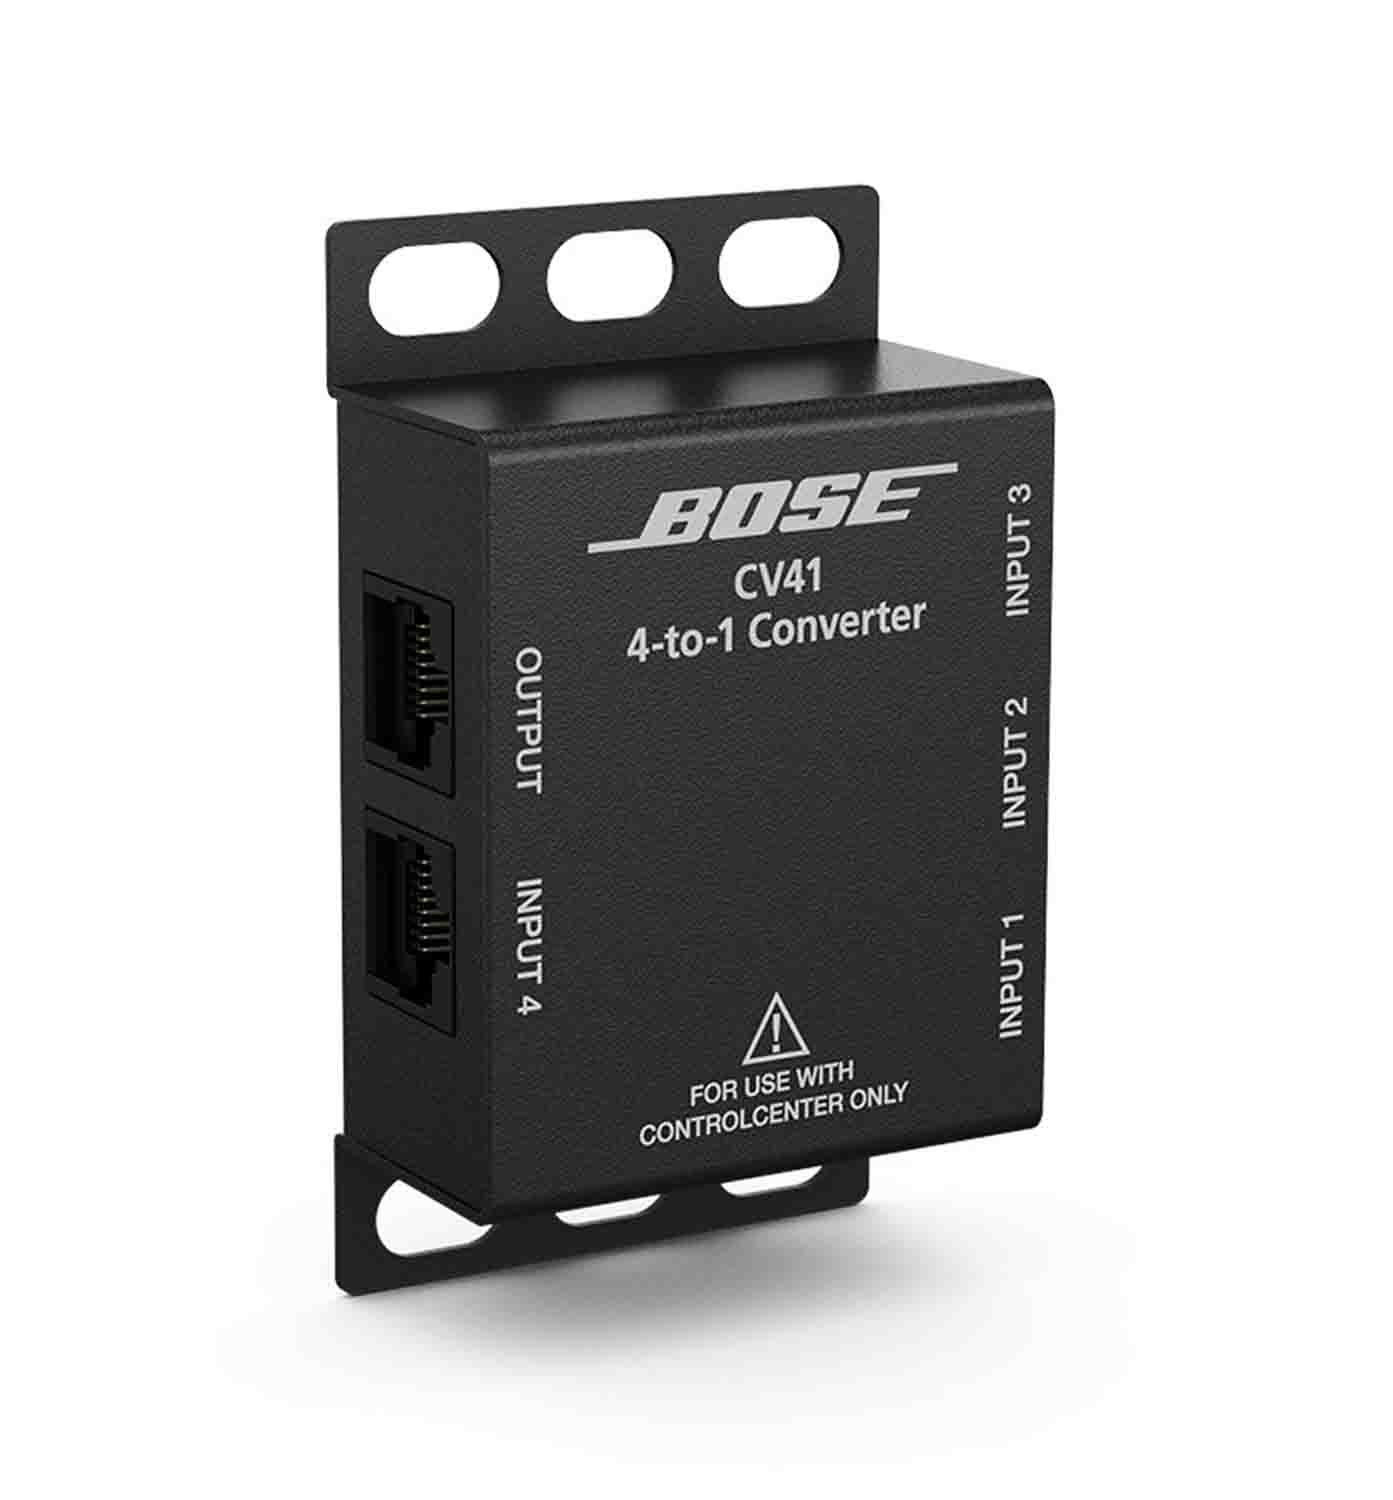 Bose CV41, ControlCenter 4-to-1 Converter - Hollywood DJ